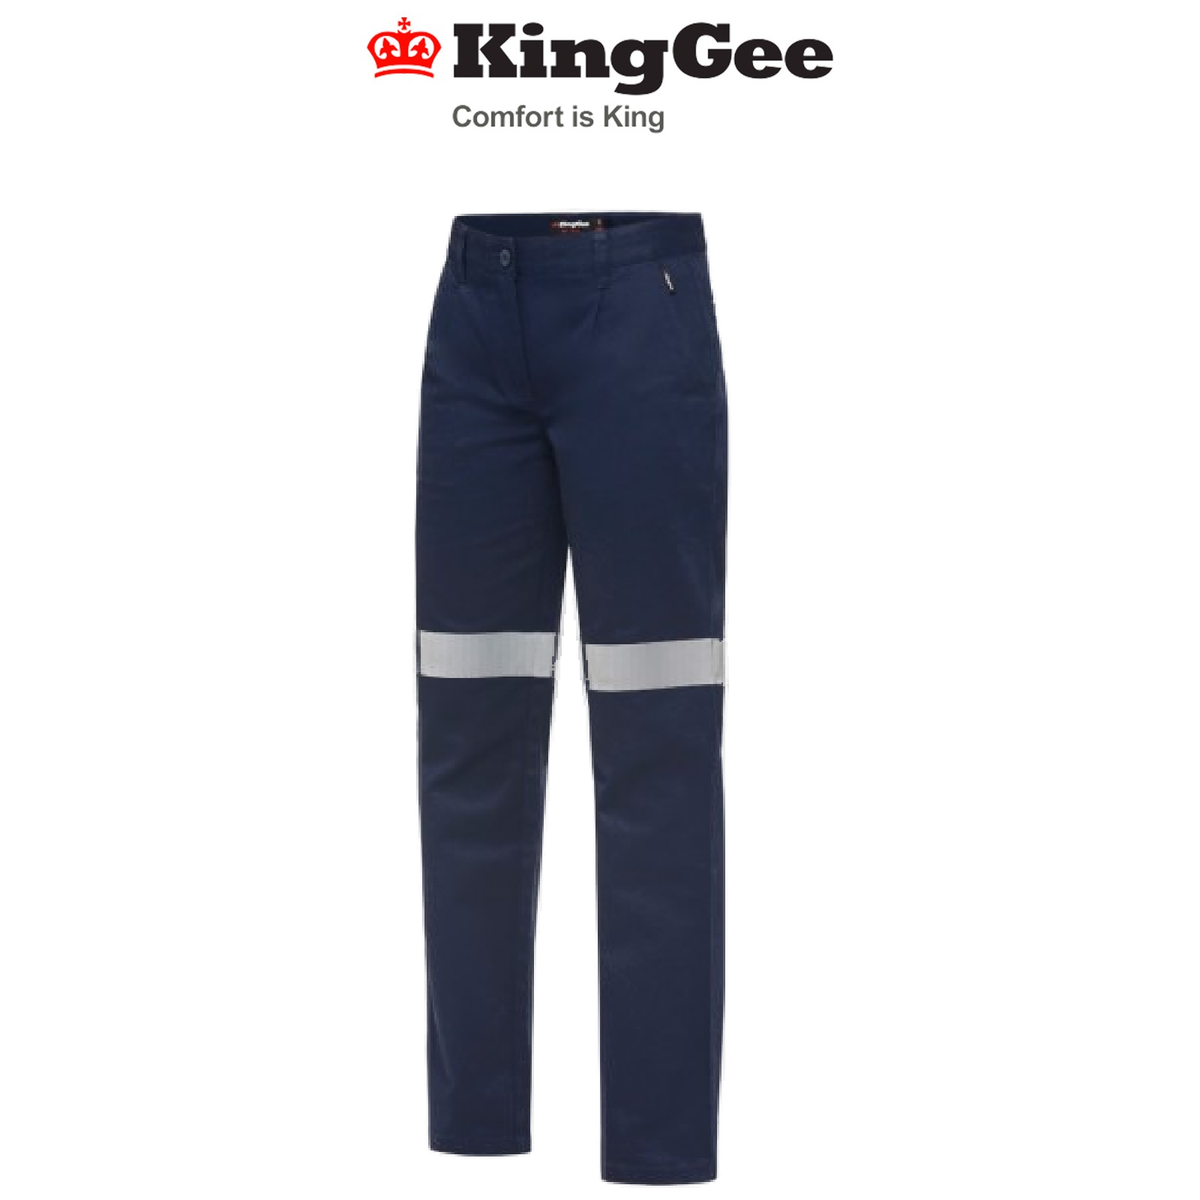 KingGee Women's Drill Reflective Pants Work Safety Tough Reinforced Comfy K43535